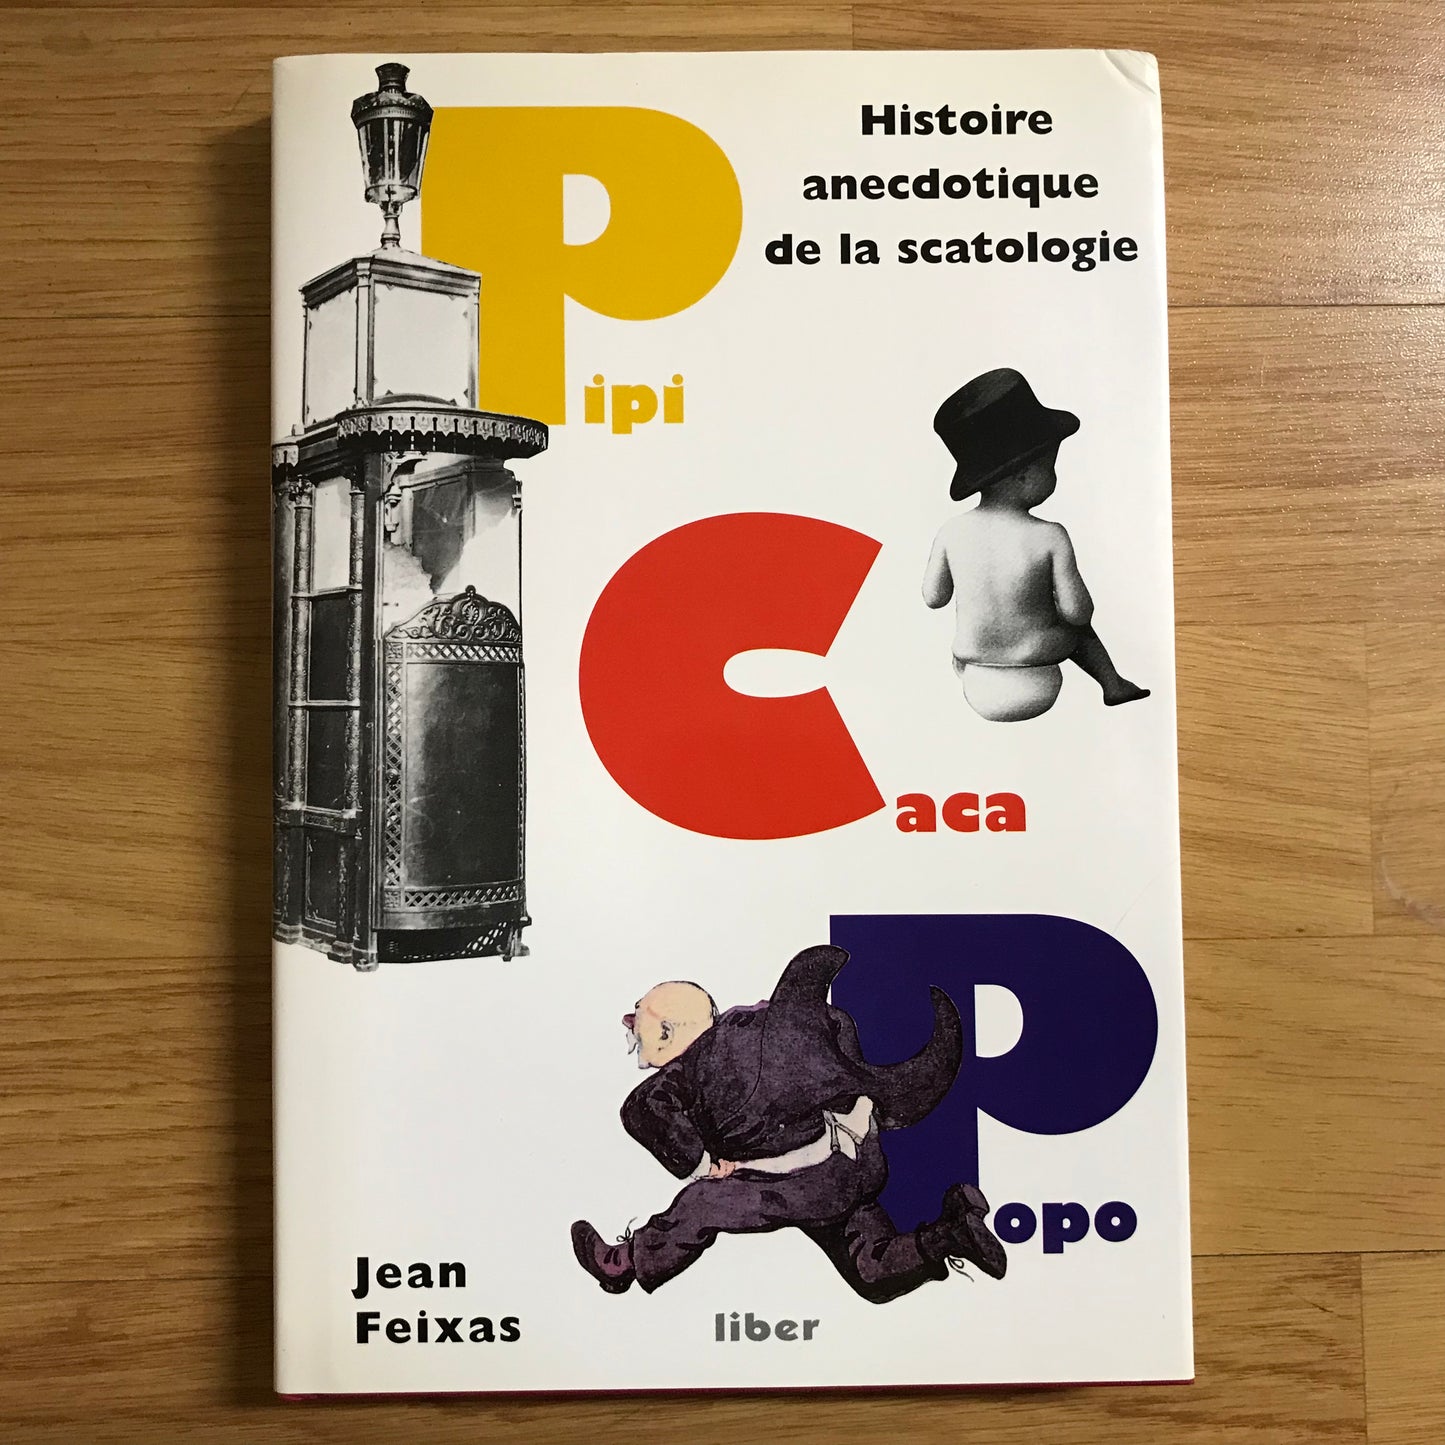 Feixas, Jean - Pipi Caca Popo, histoire anecdotique de la scatologie